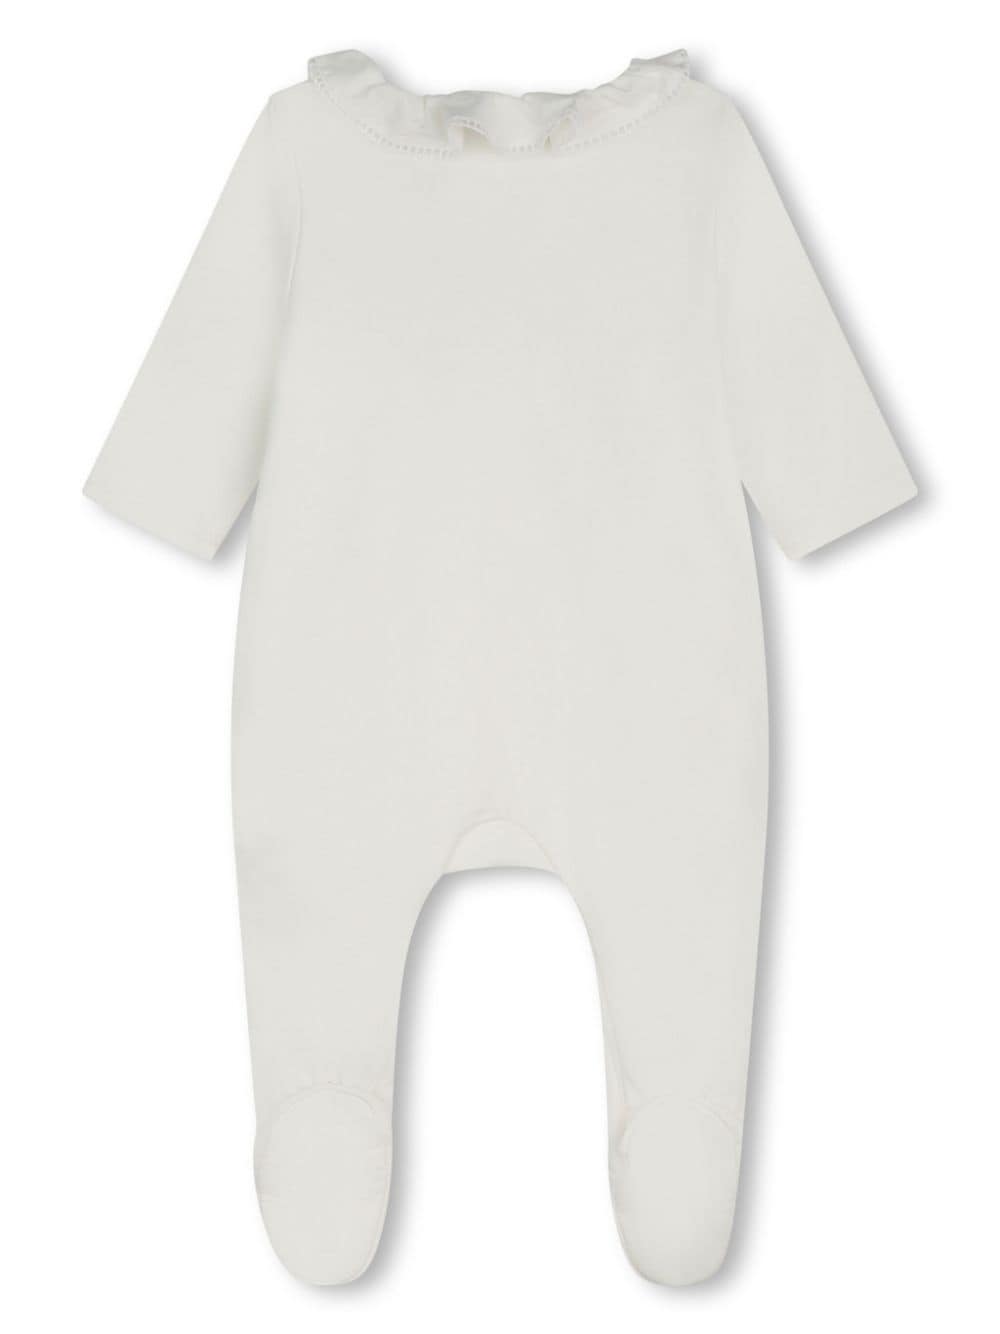 White baby girl onesie set with logo